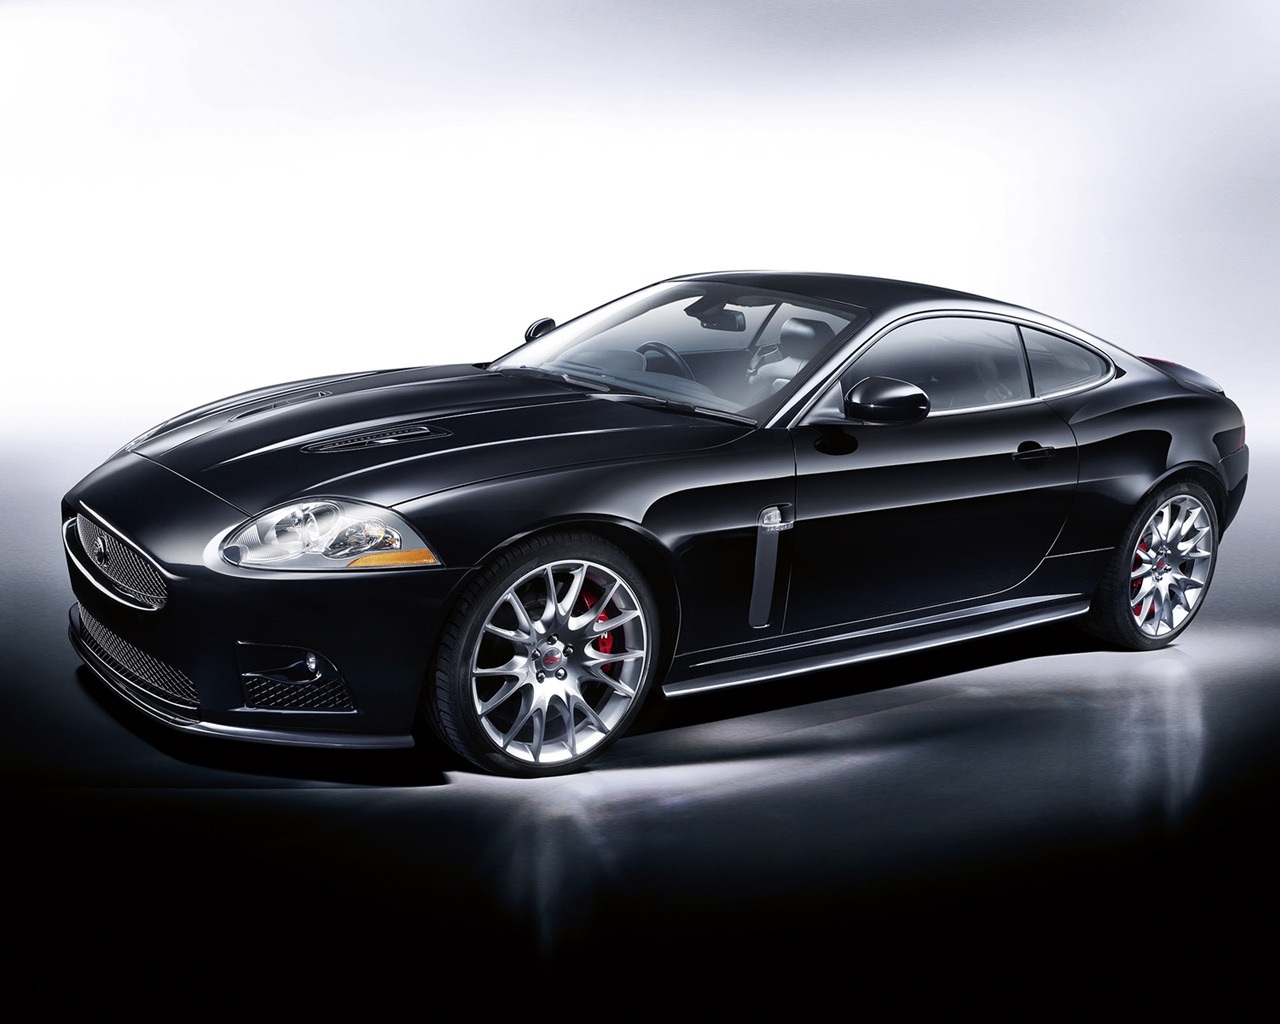 Jaguar XKR Studio for 1280 x 1024 resolution